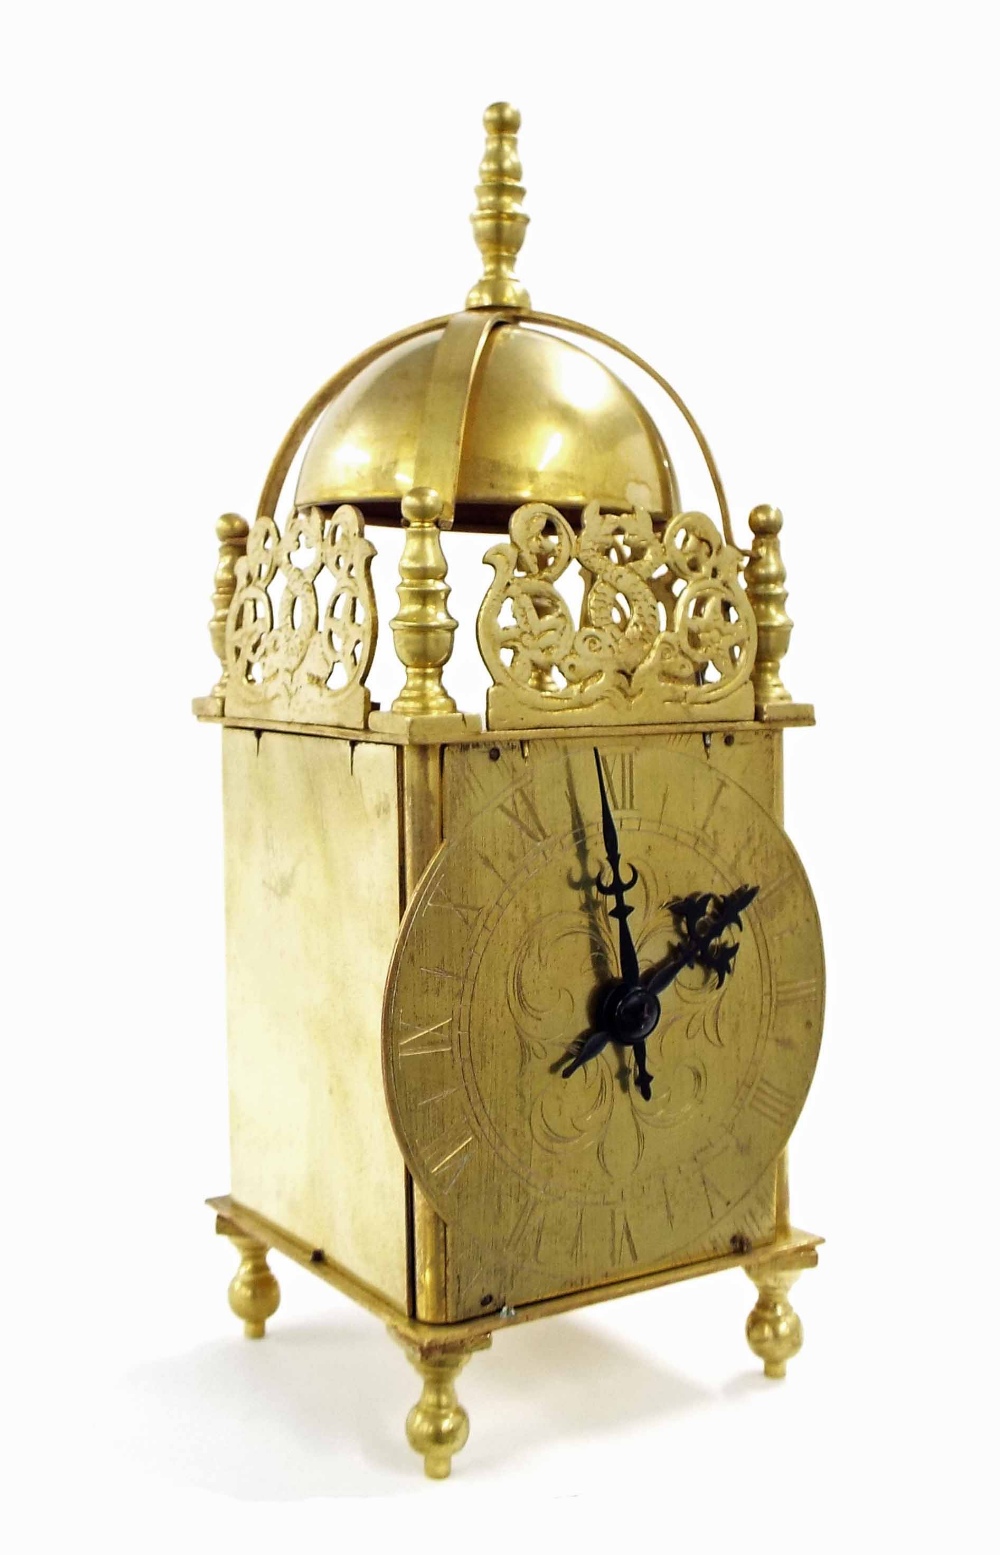 Small brass lantern clock timepiece with Buren platform movement and fixed key, 10.25" high